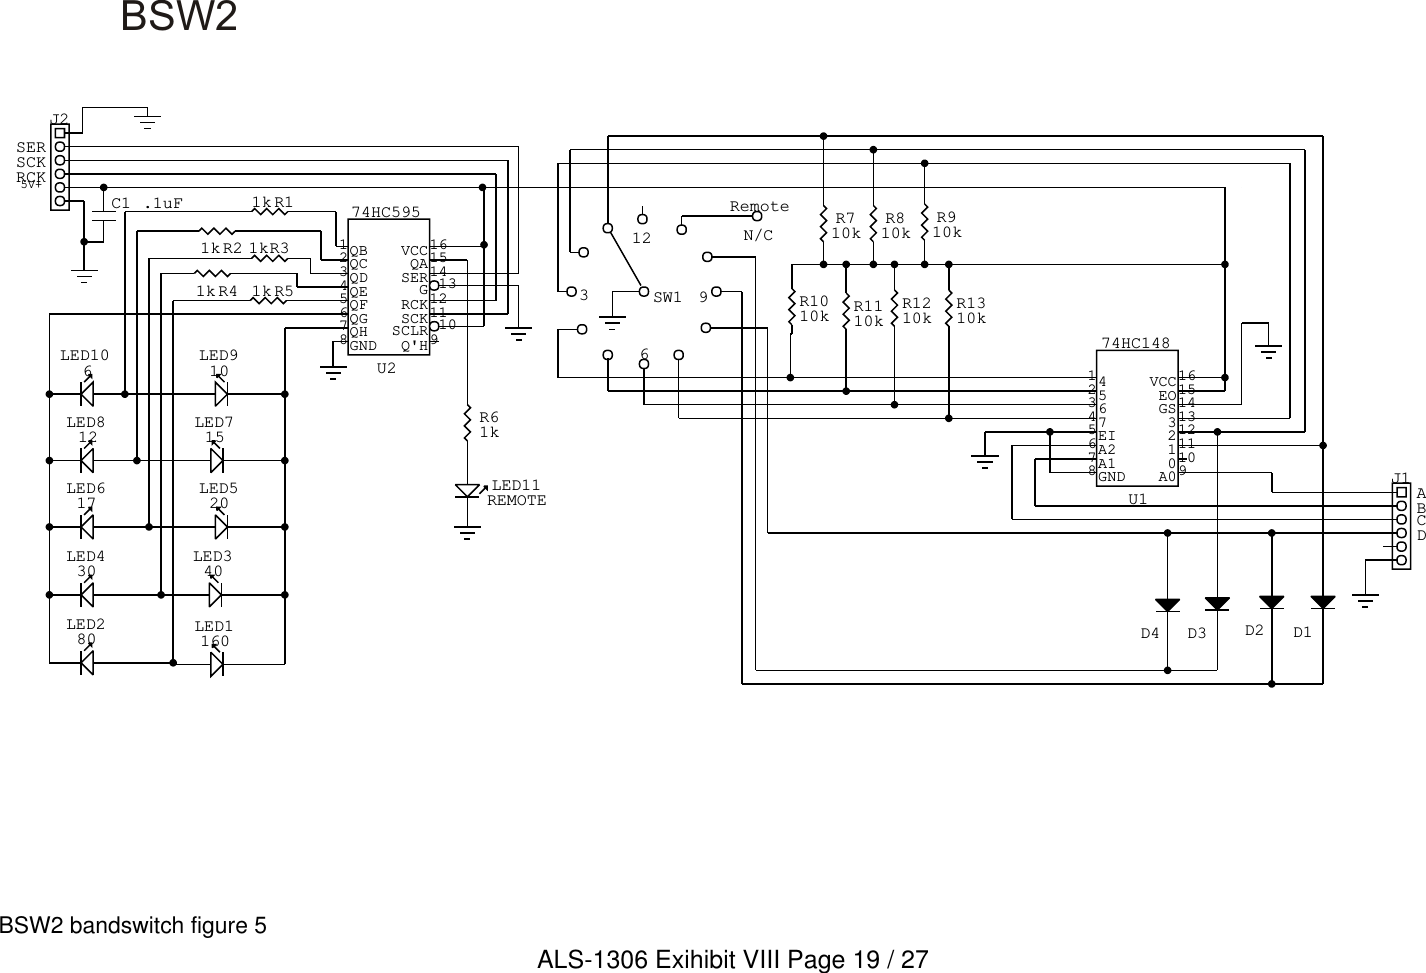 Ameritron 2WUALS1306 ALS1306 amateur radio linear amplifier User Manual ...